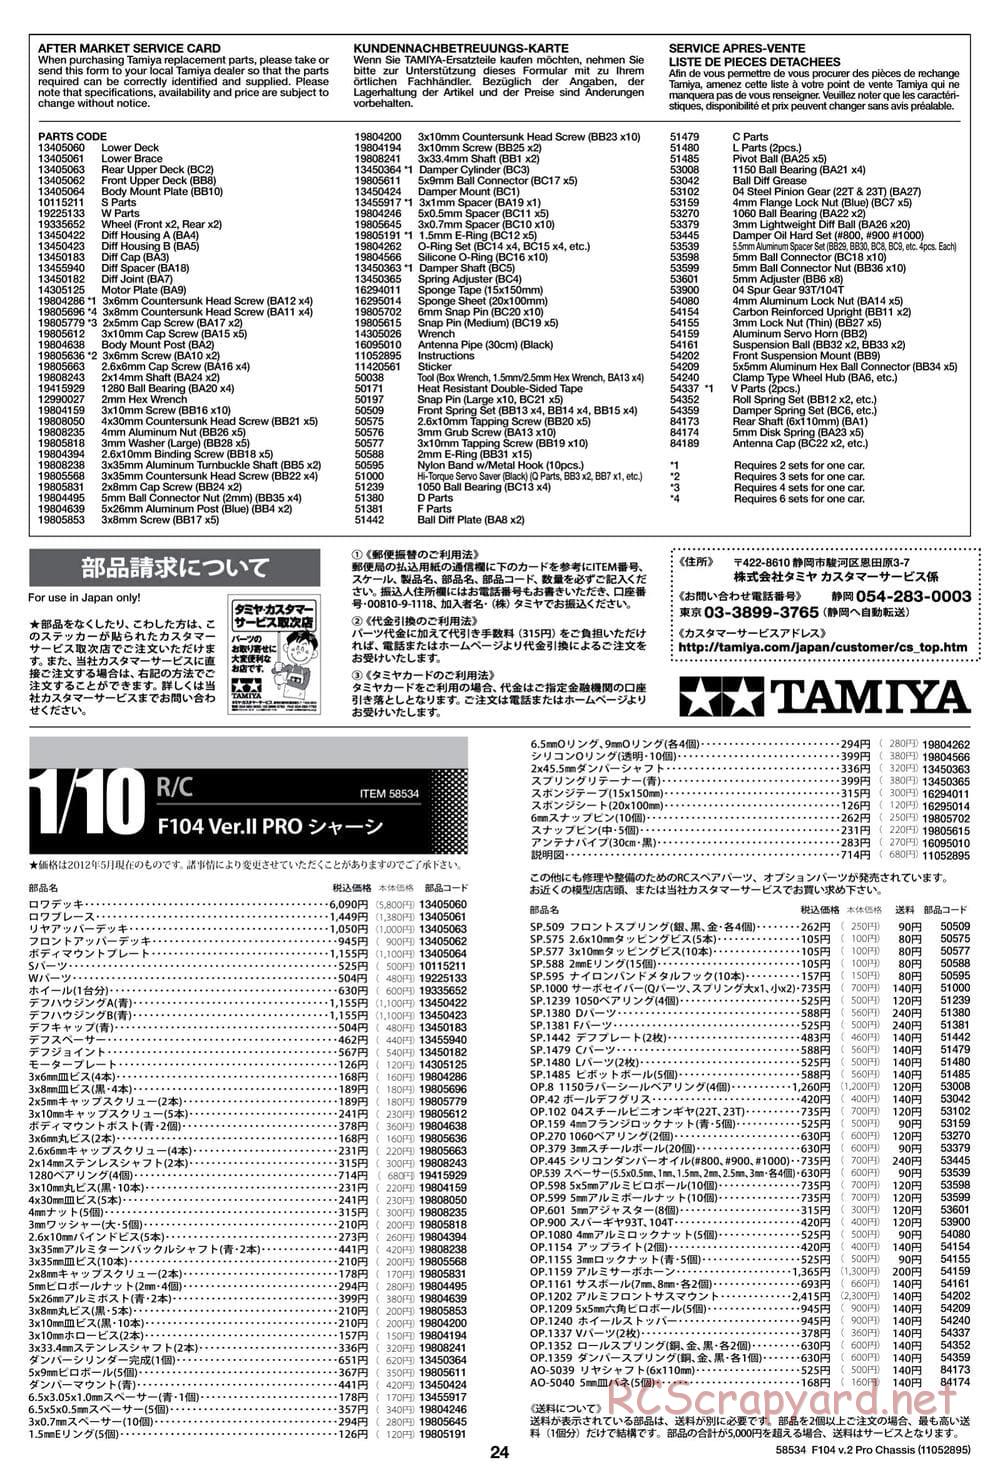 Tamiya - F104 Ver.II PRO Chassis - Manual - Page 24